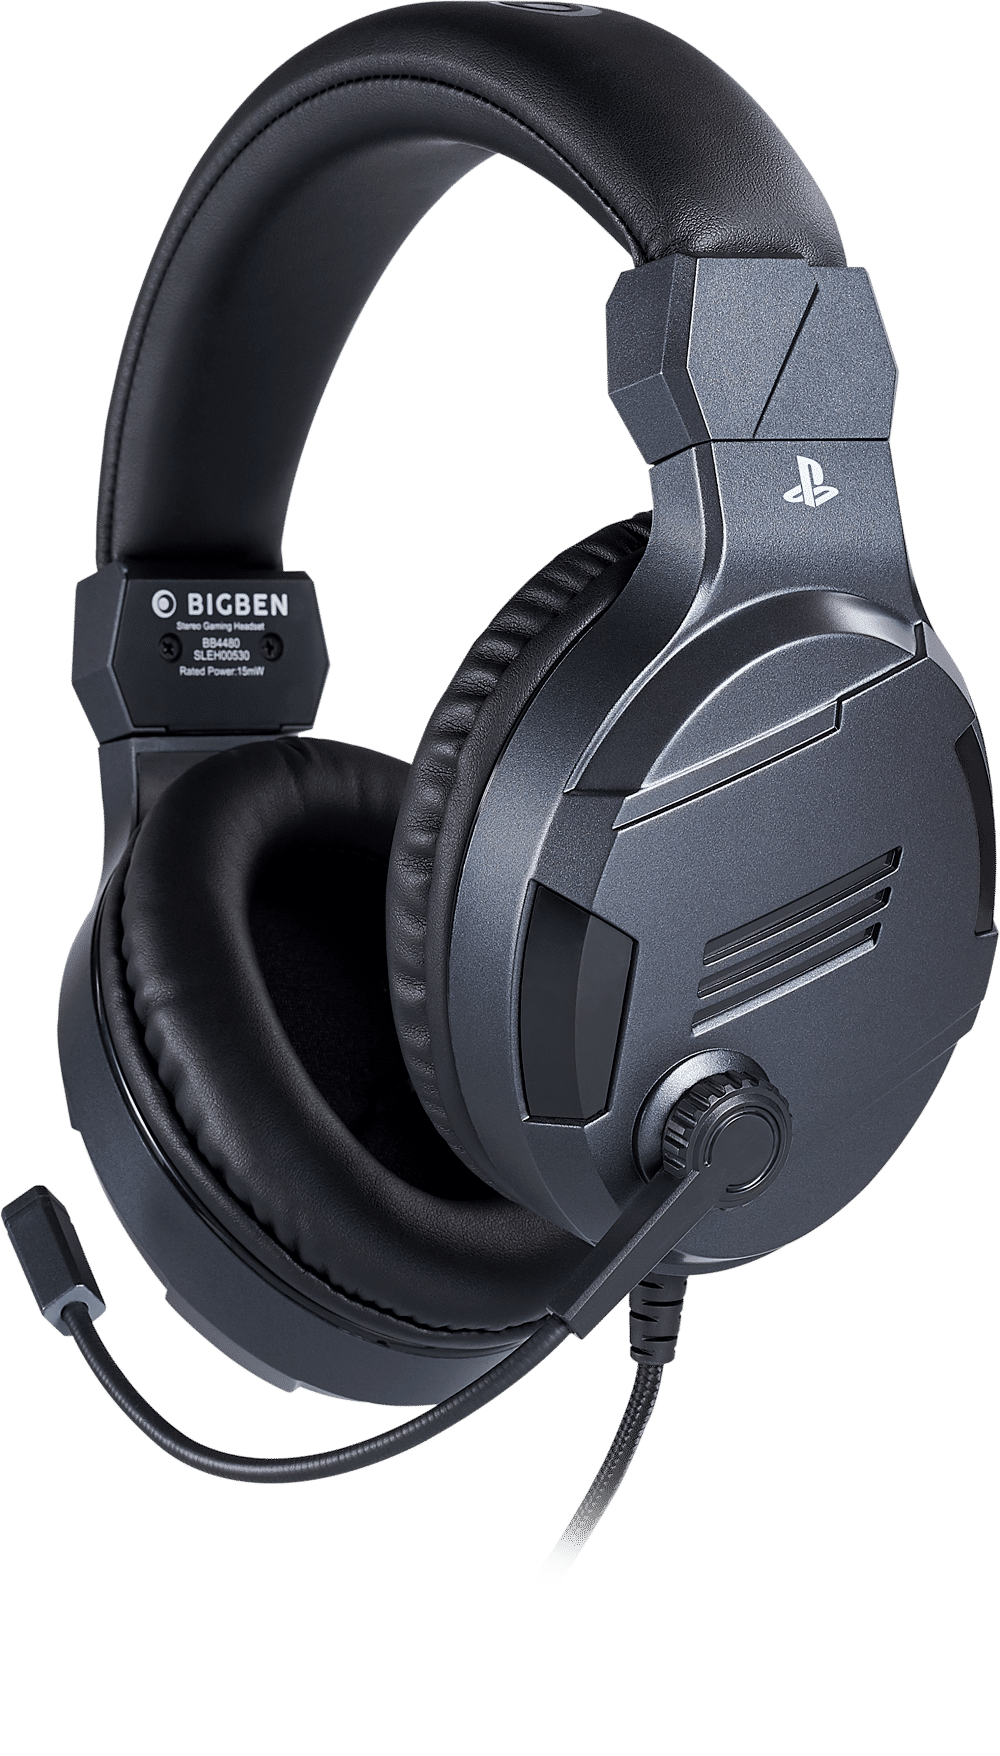 big-ben-stereo-gaming-headset-v3-titan-black-official-sony-license